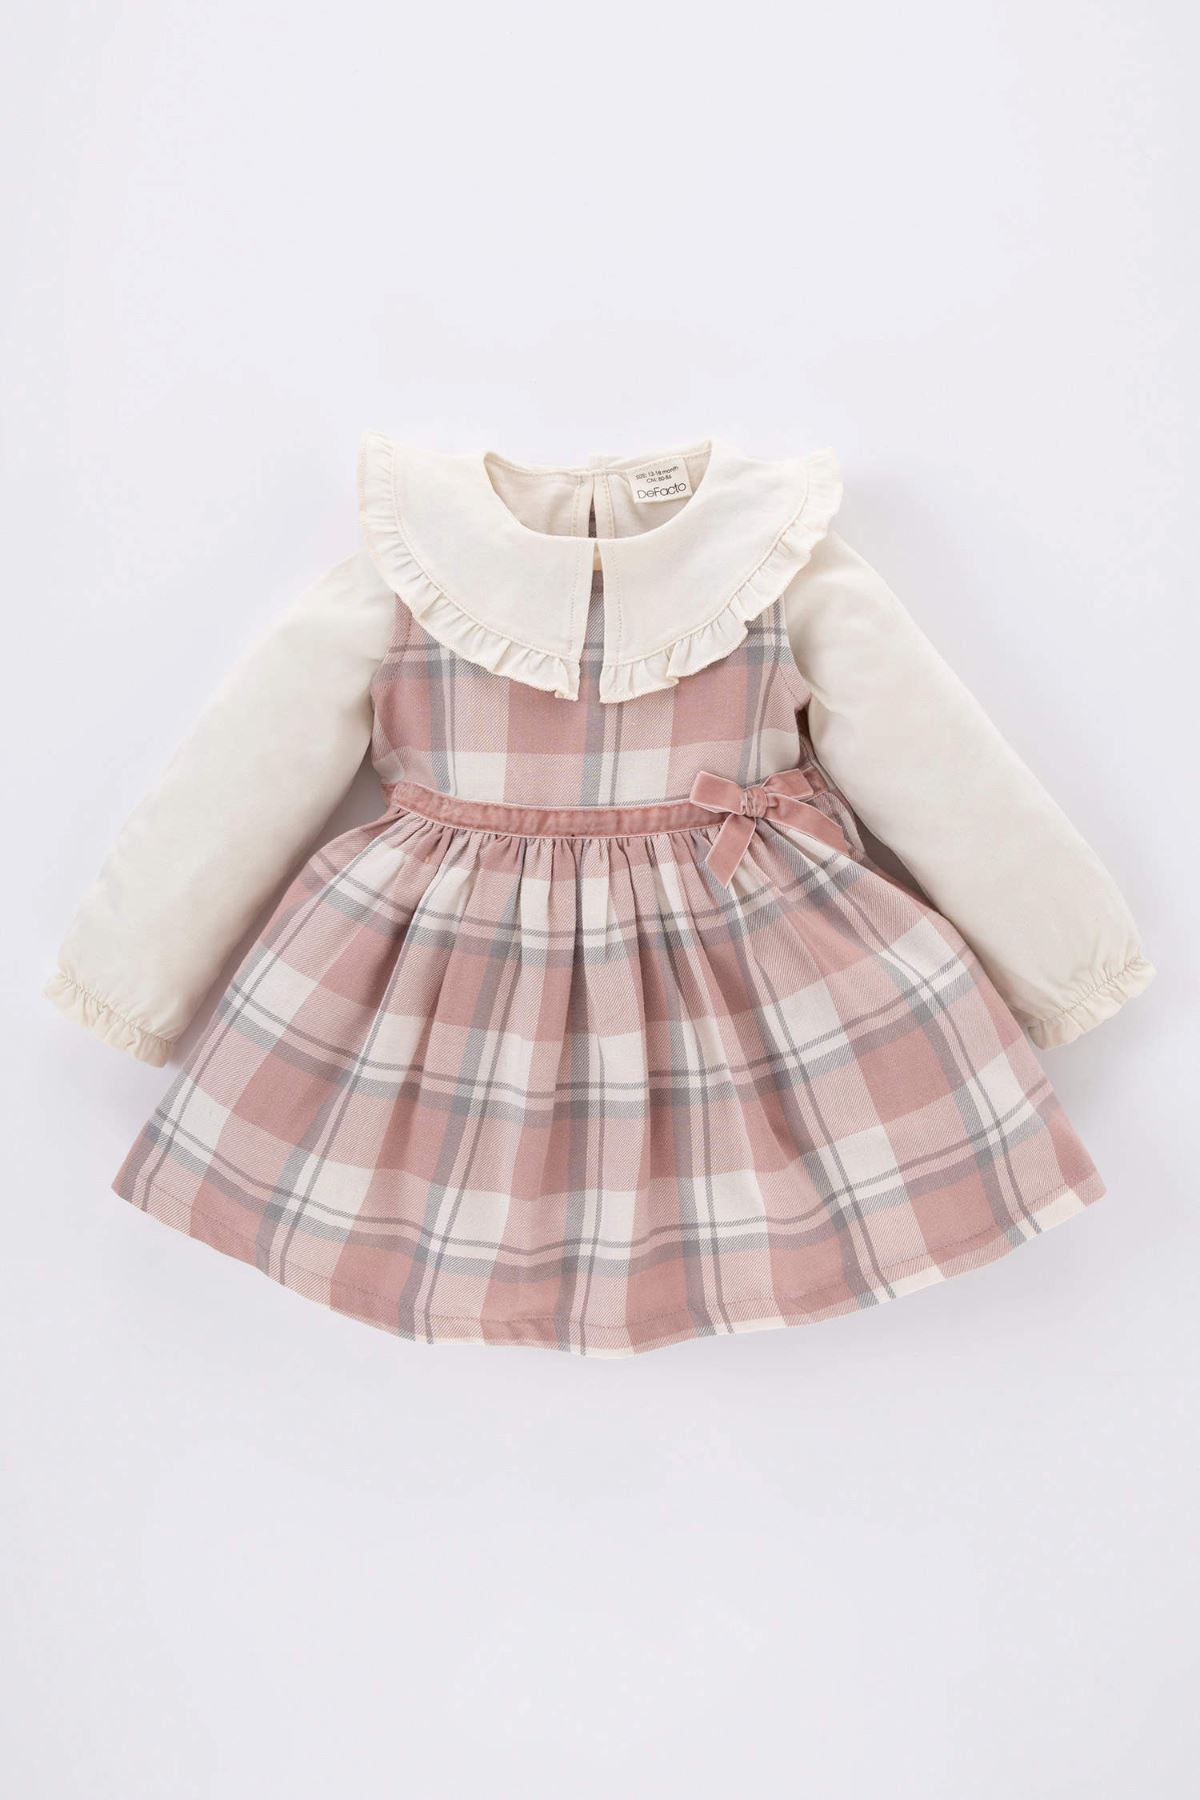 Defacto Kız Bebek Pembe Elbise - B3136A5/BR105